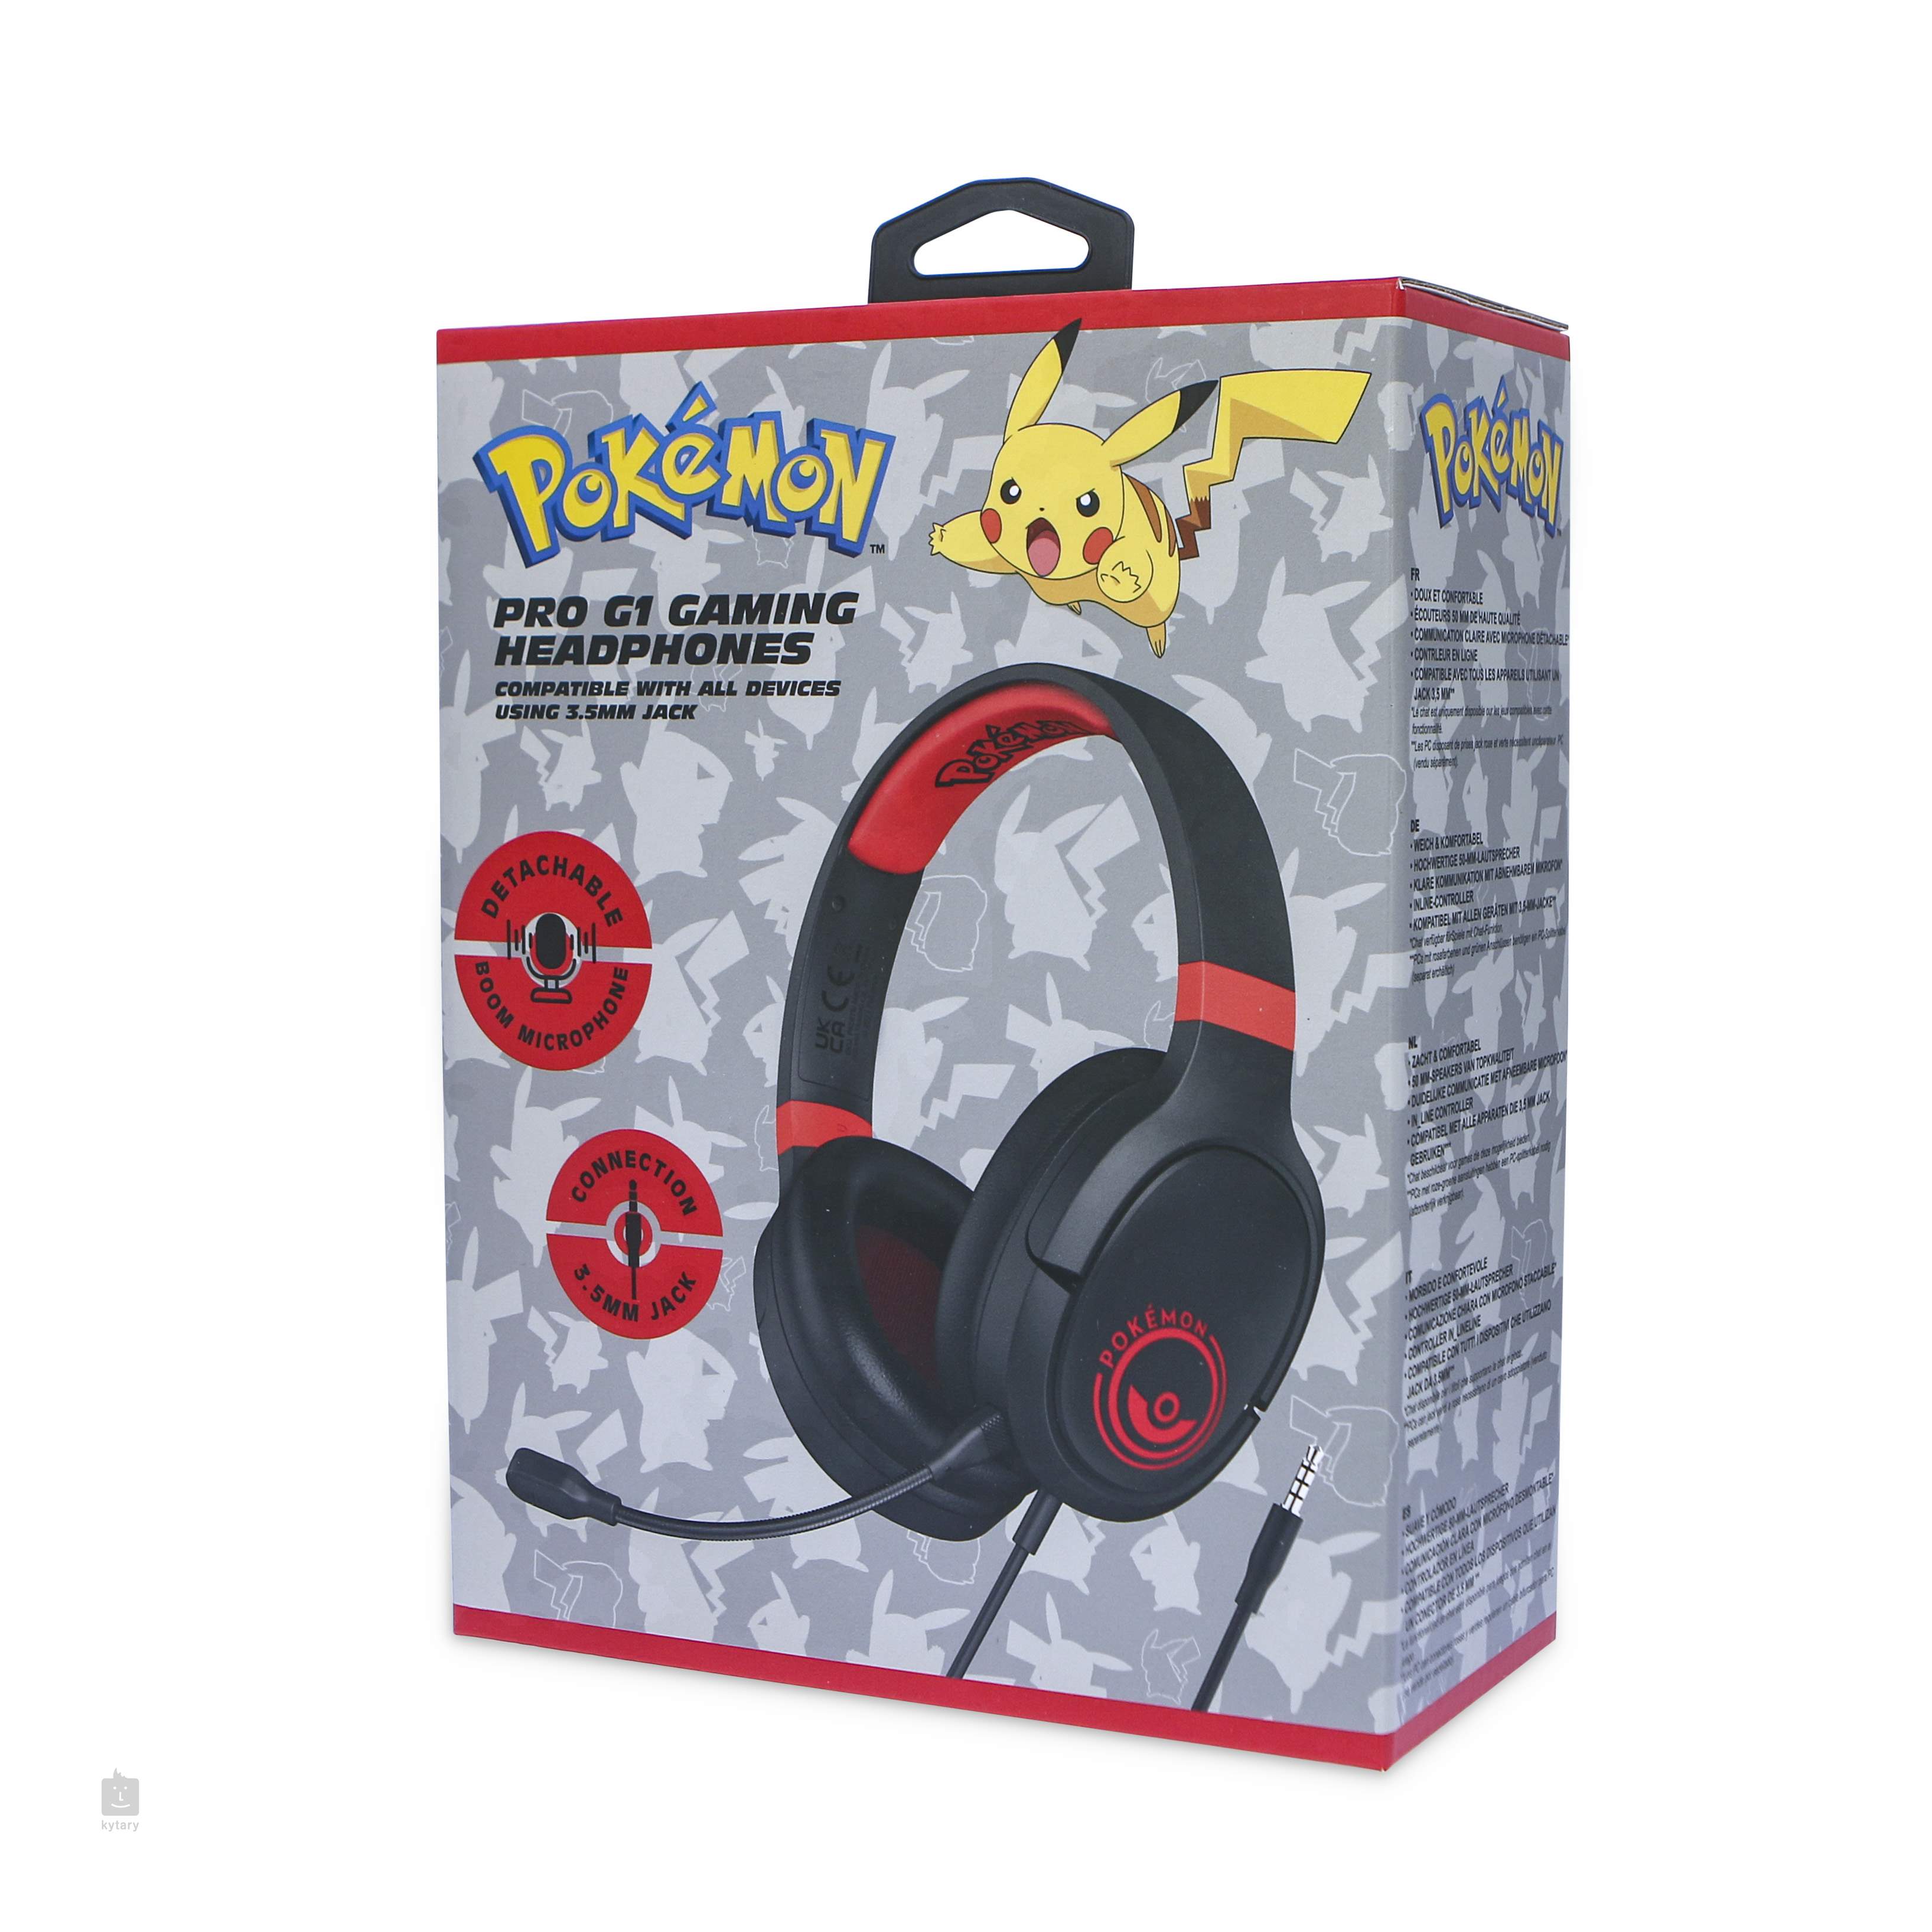 OTL Pokémon Poké ball Black and Red PRO G1 Gaming Headphones Headphones 